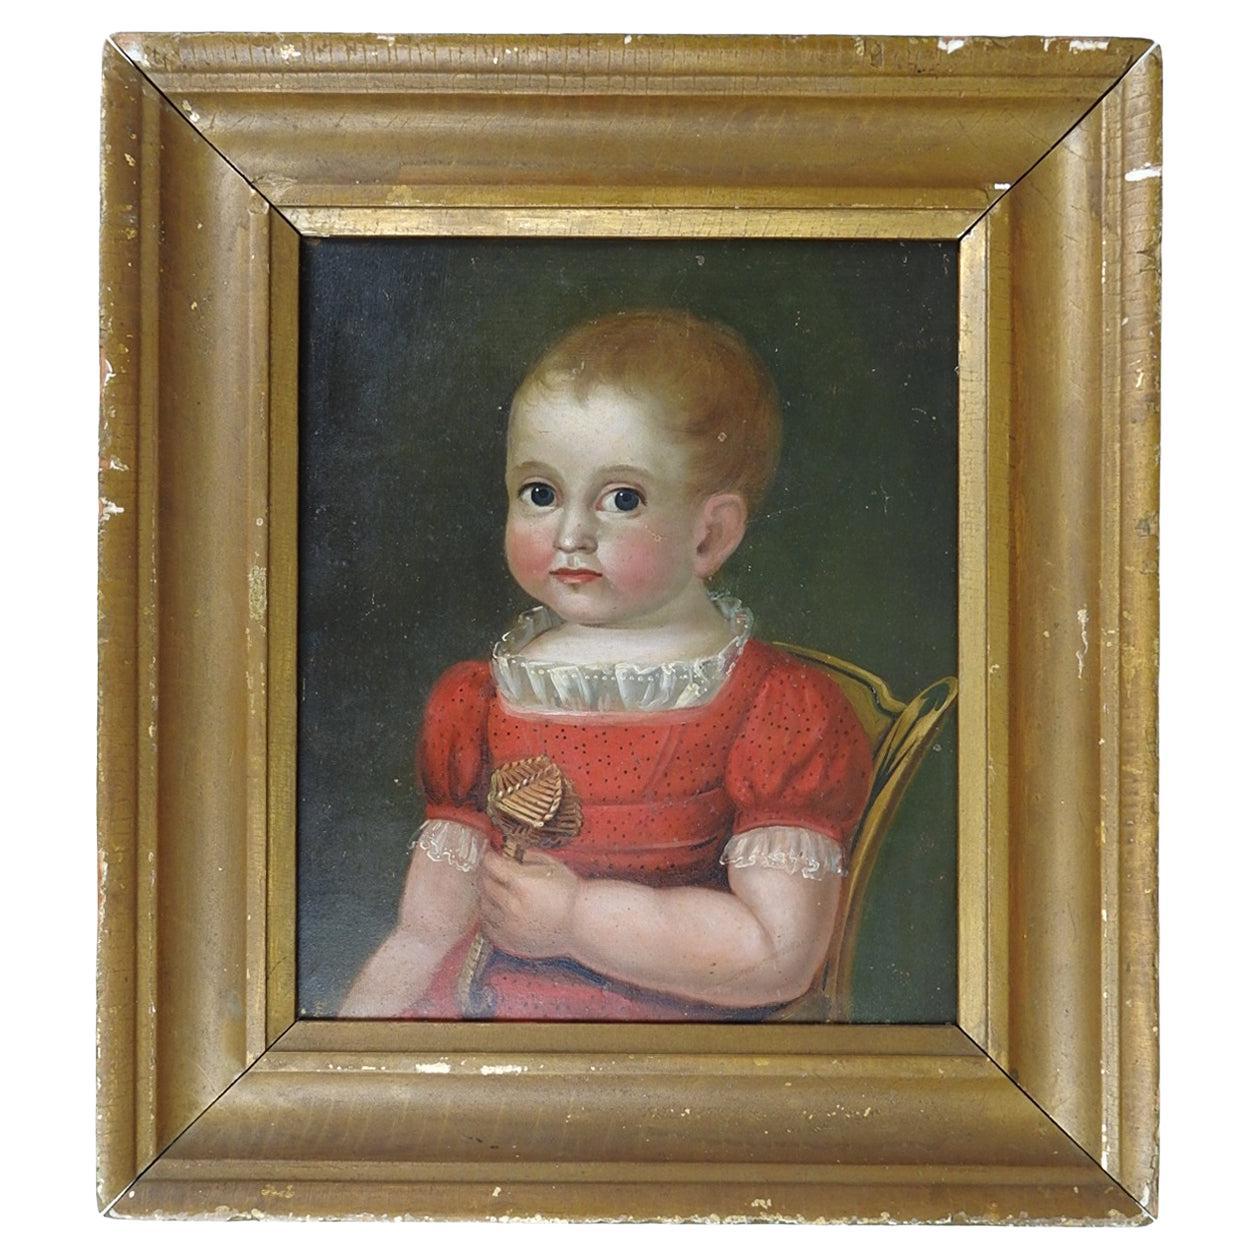 Volkskunst-Porträtgemälde eines Kindes aus dem frühen 19. Jahrhundert